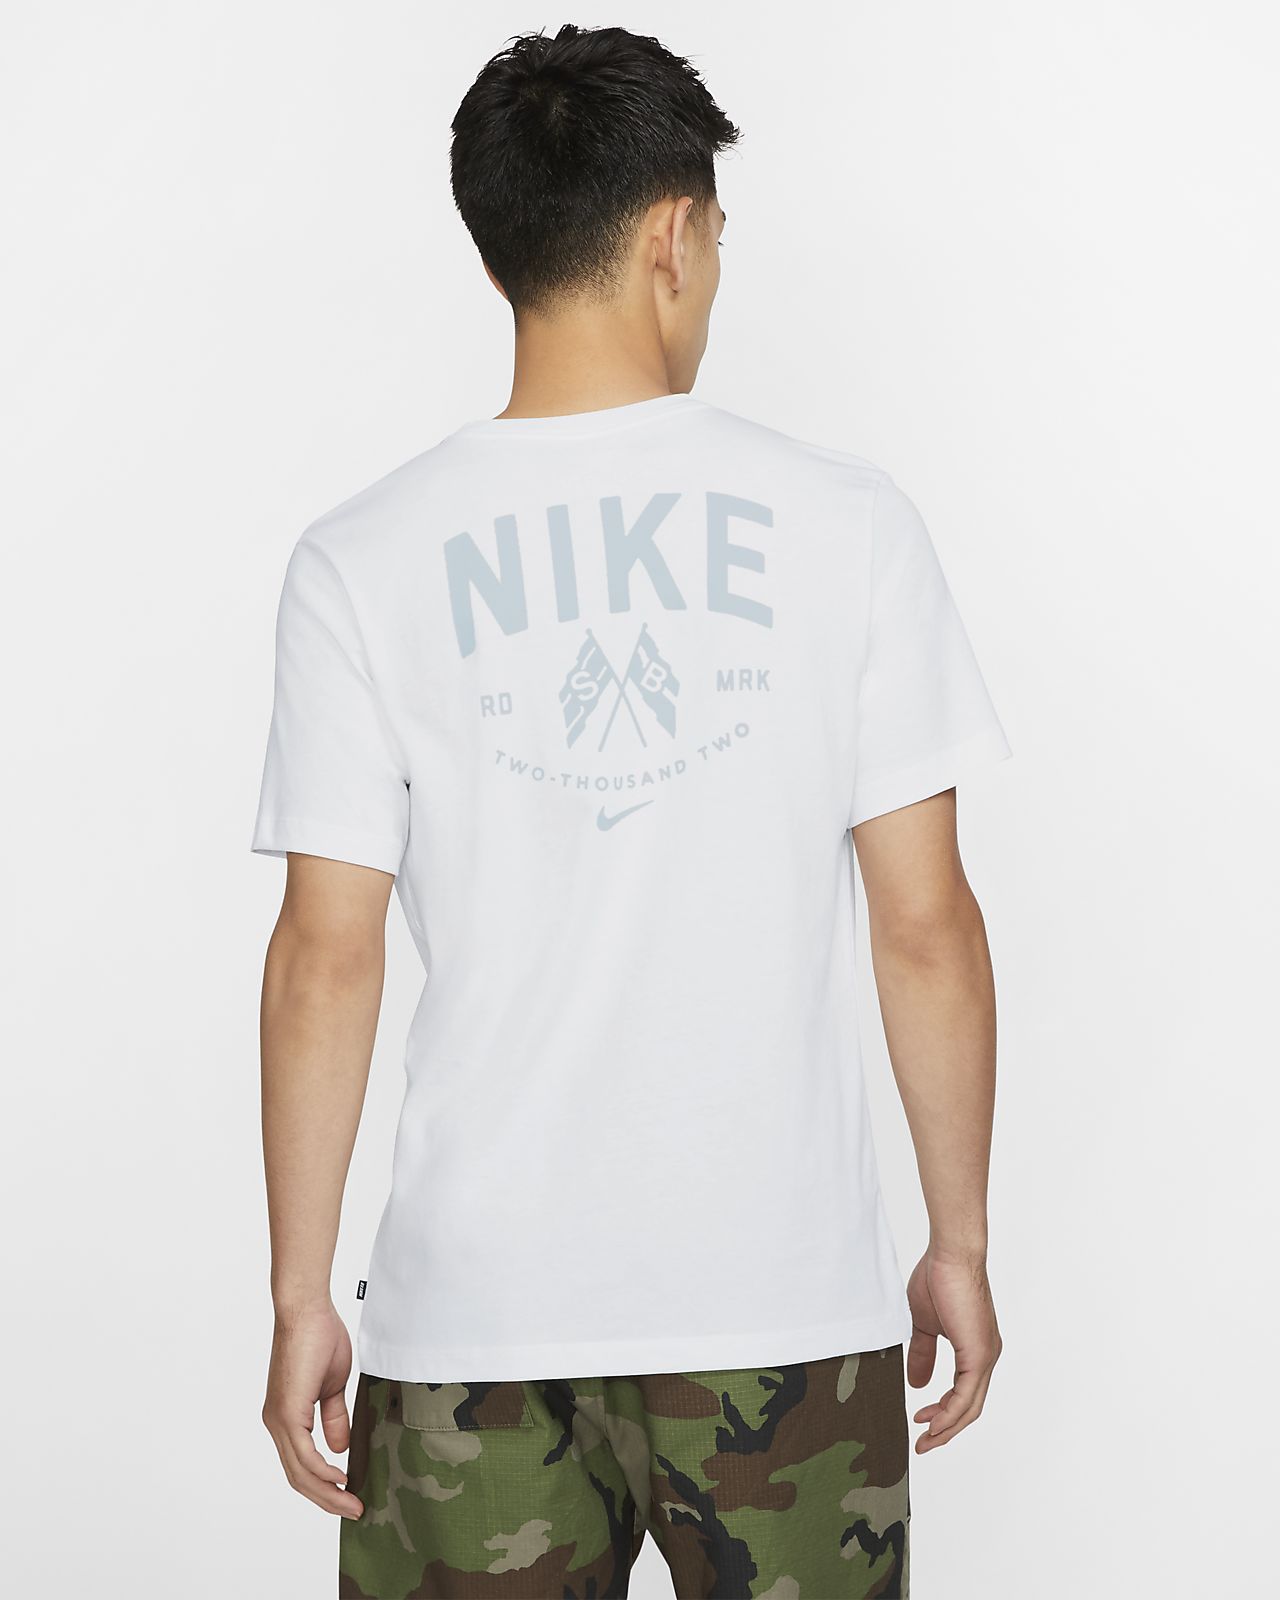 Nike Sb Men S Skate T Shirt Nike Id